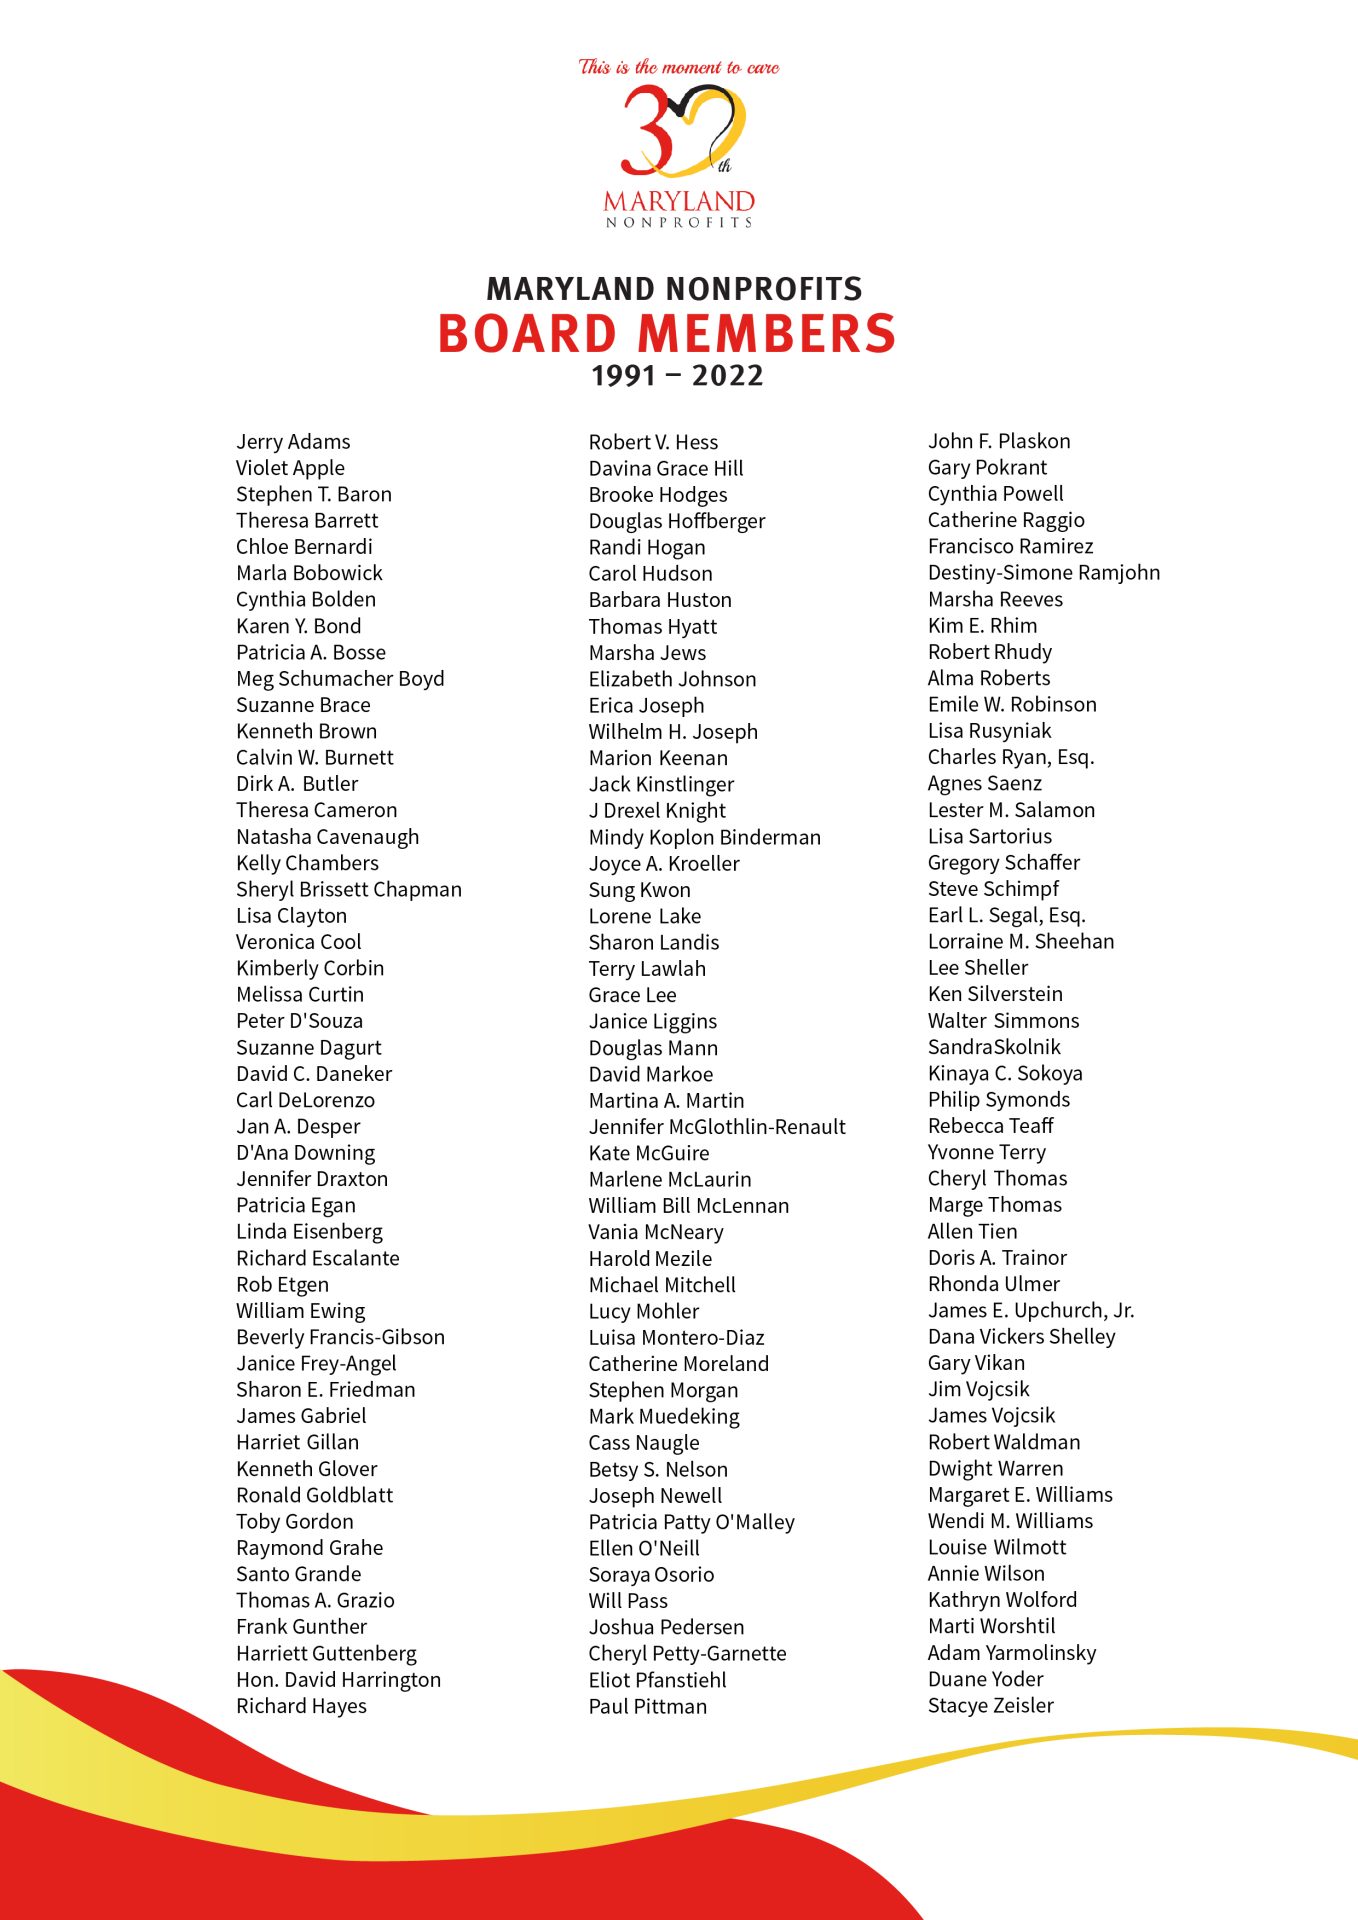 Maryland nonprofits board members 1991-2022